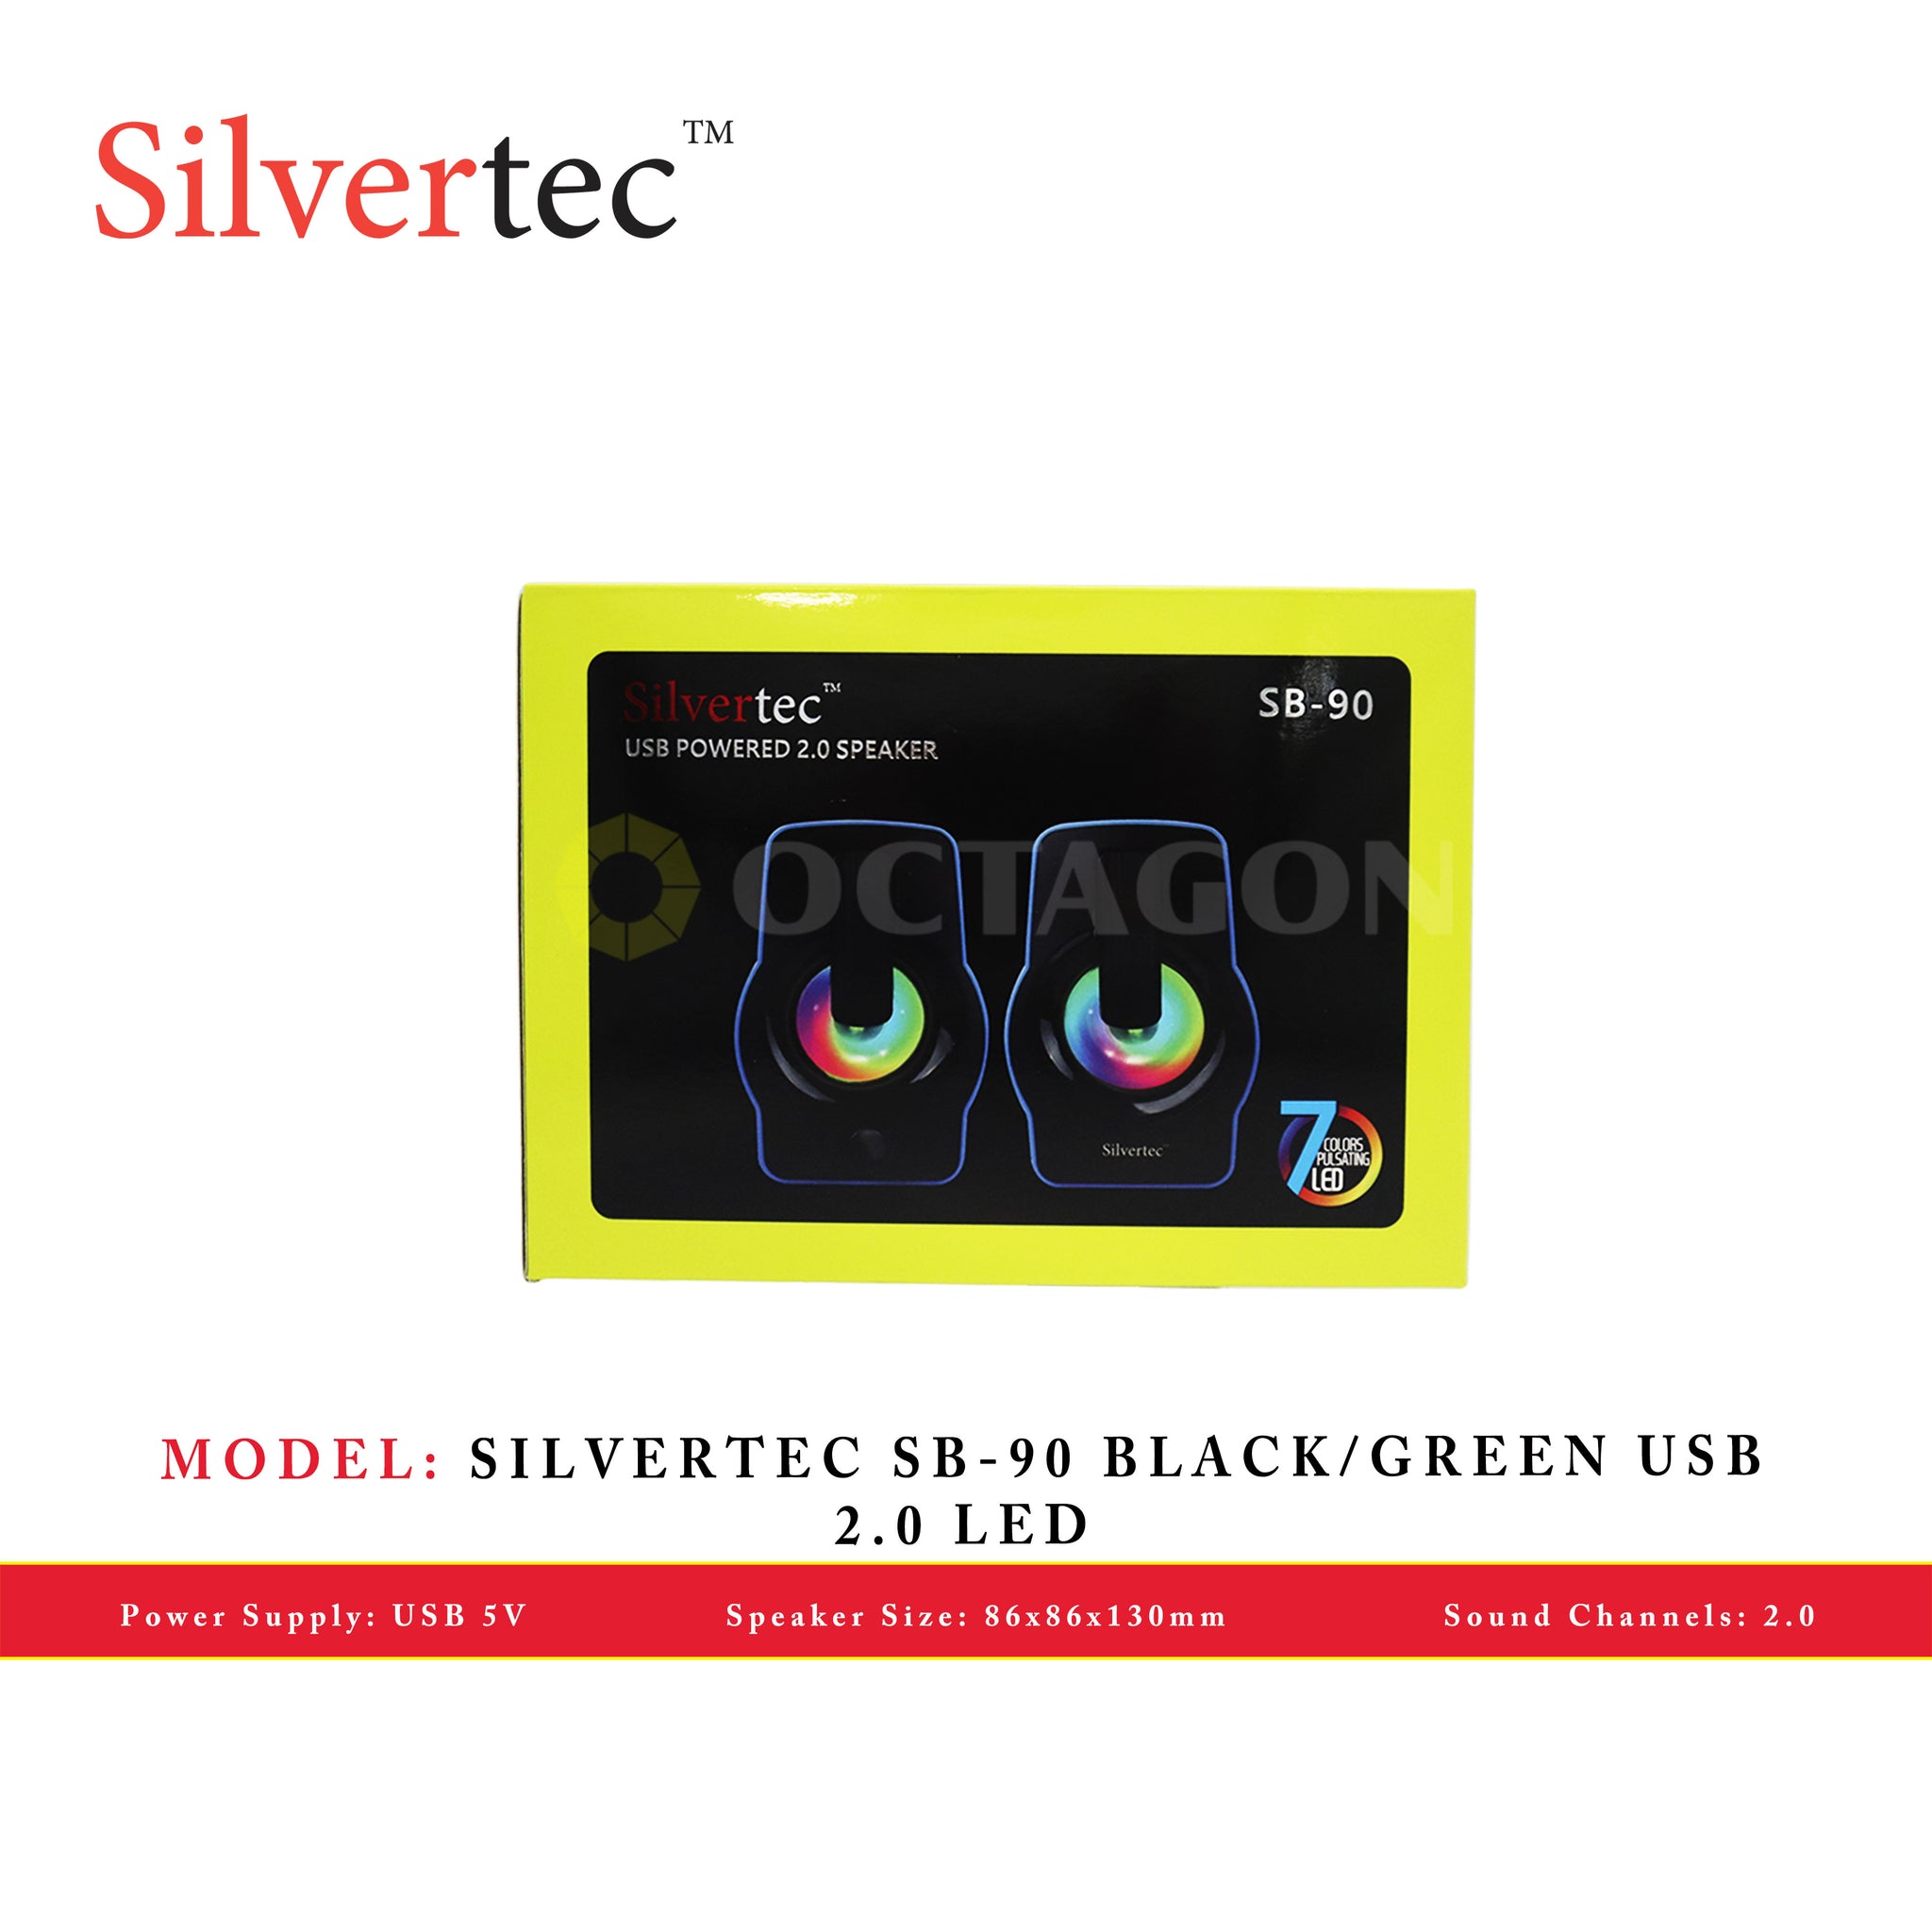 SILVERTEC SB-90 BLACK/GREEN USB 2.0 LED